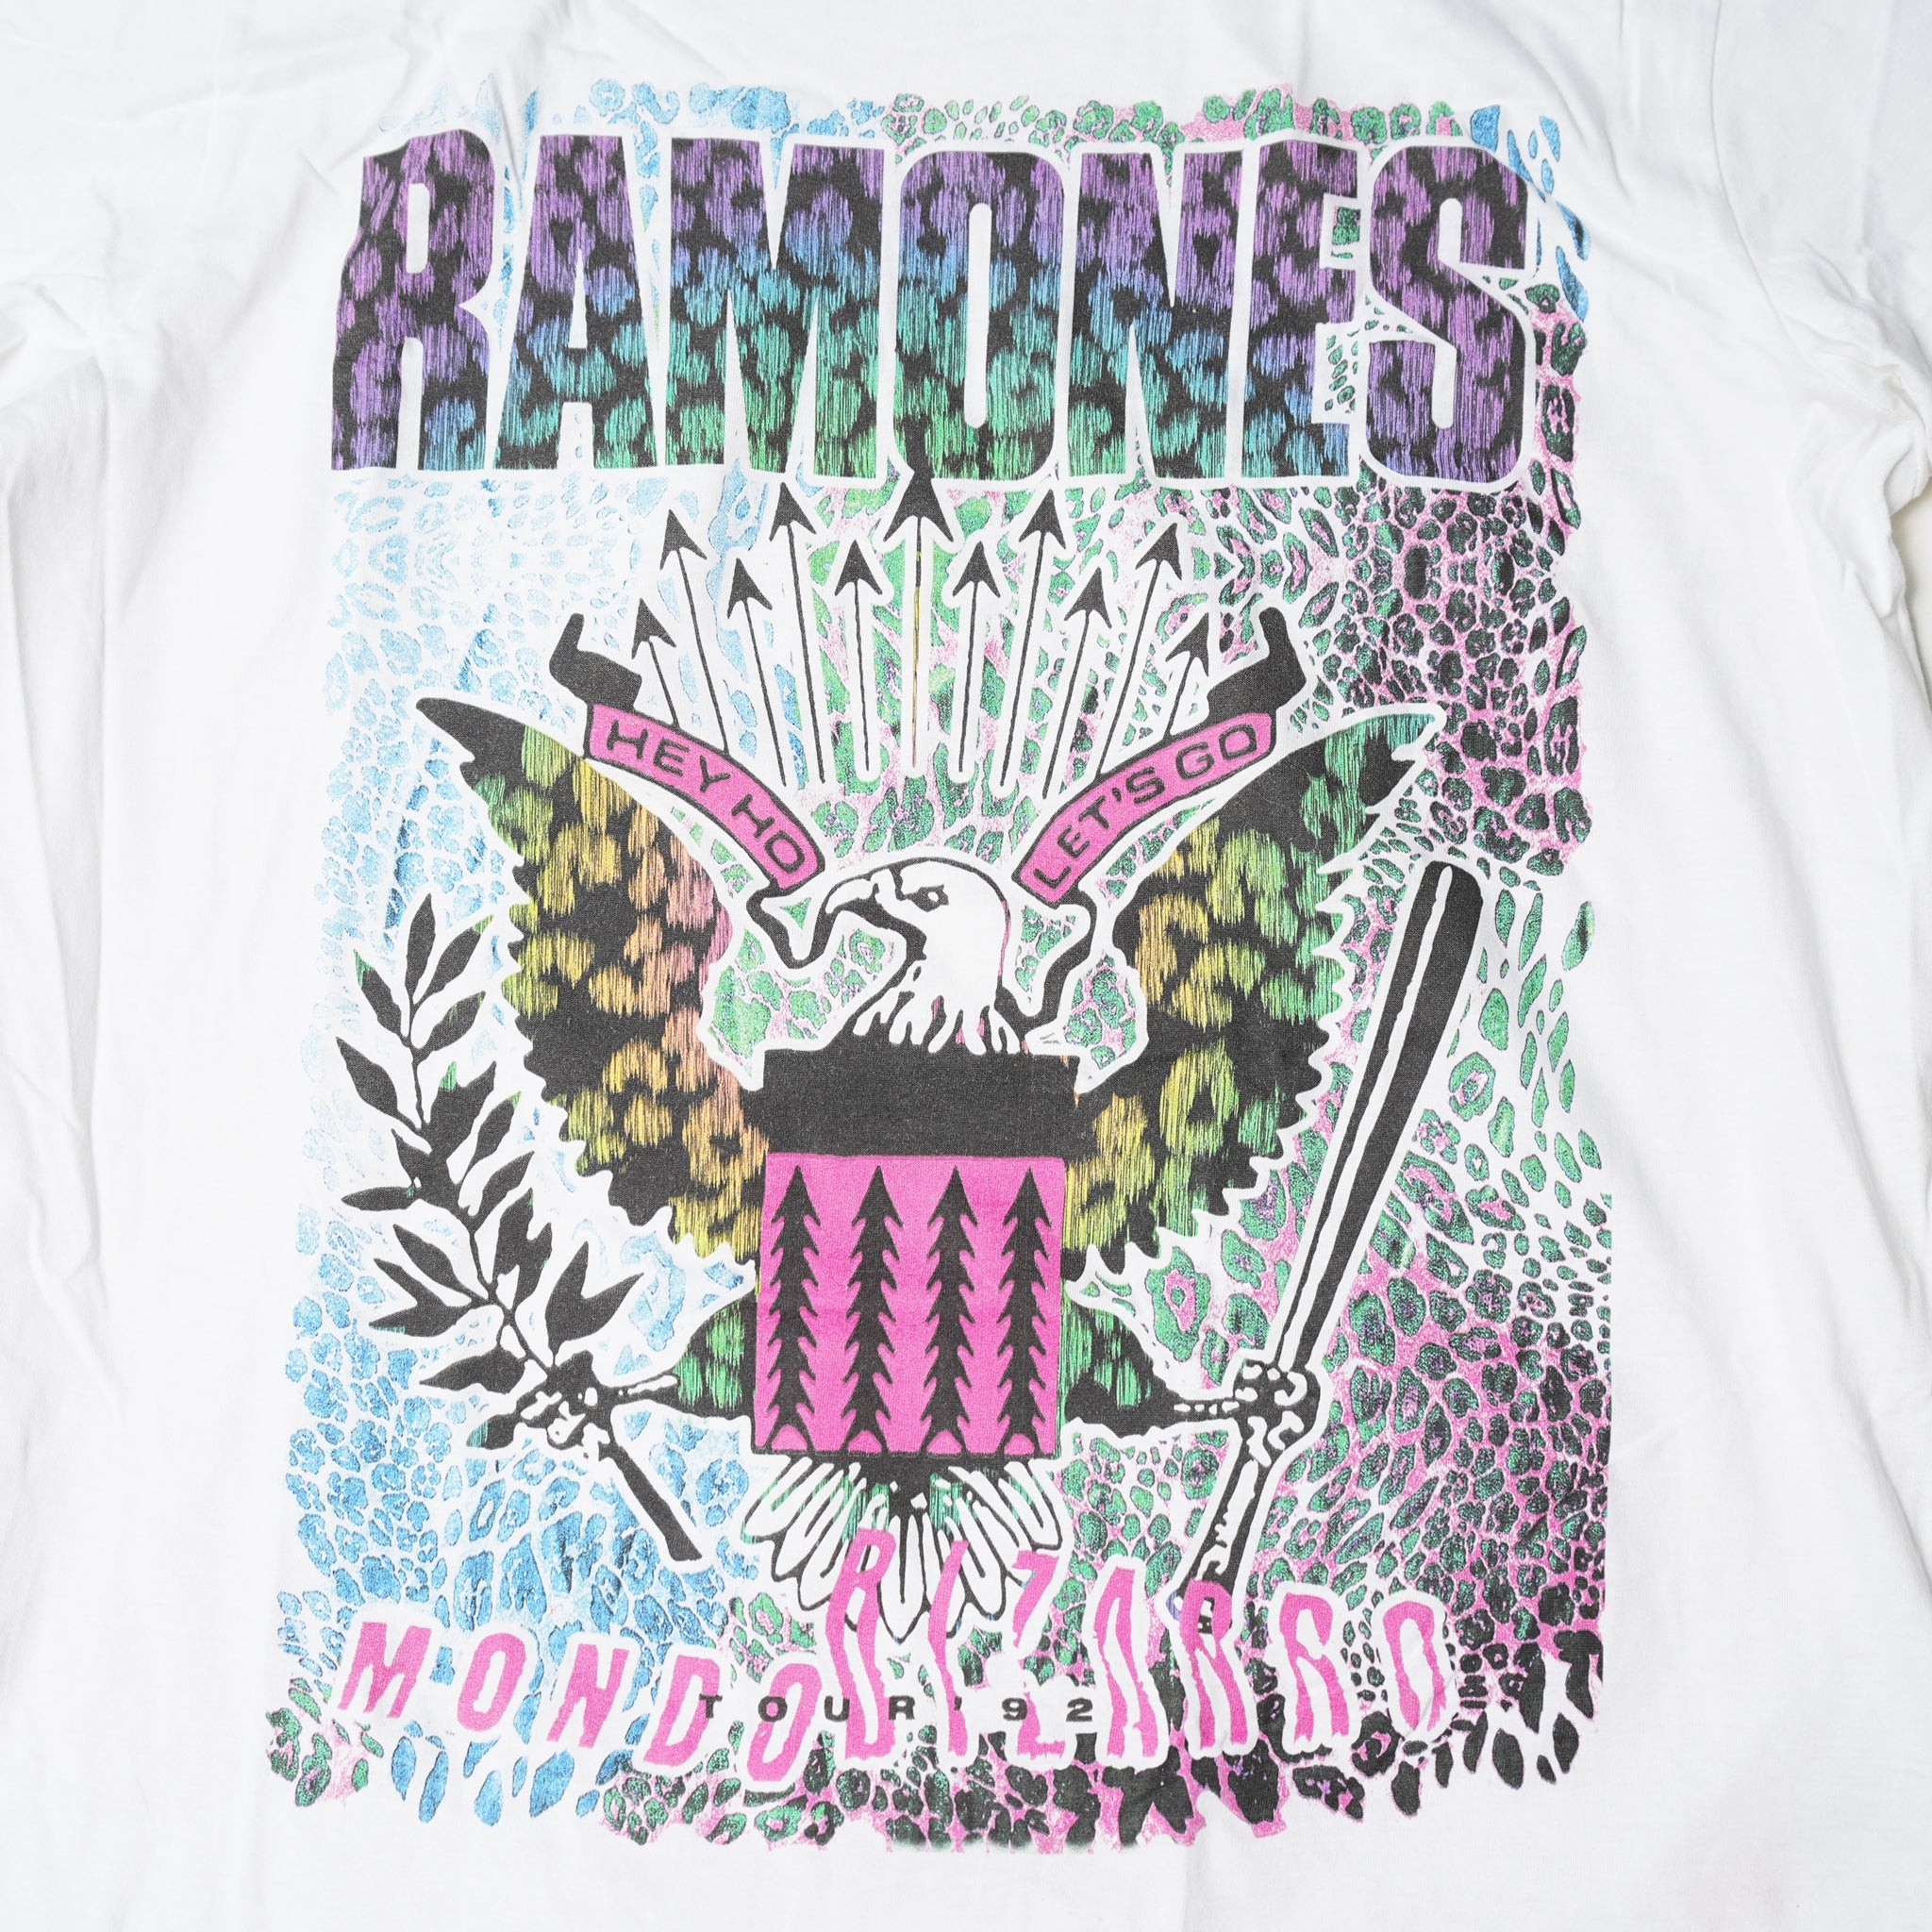 Name:Ramones_Animal Skin_Uni_WHT【ROCK OFF】【ネコポス選択可能】